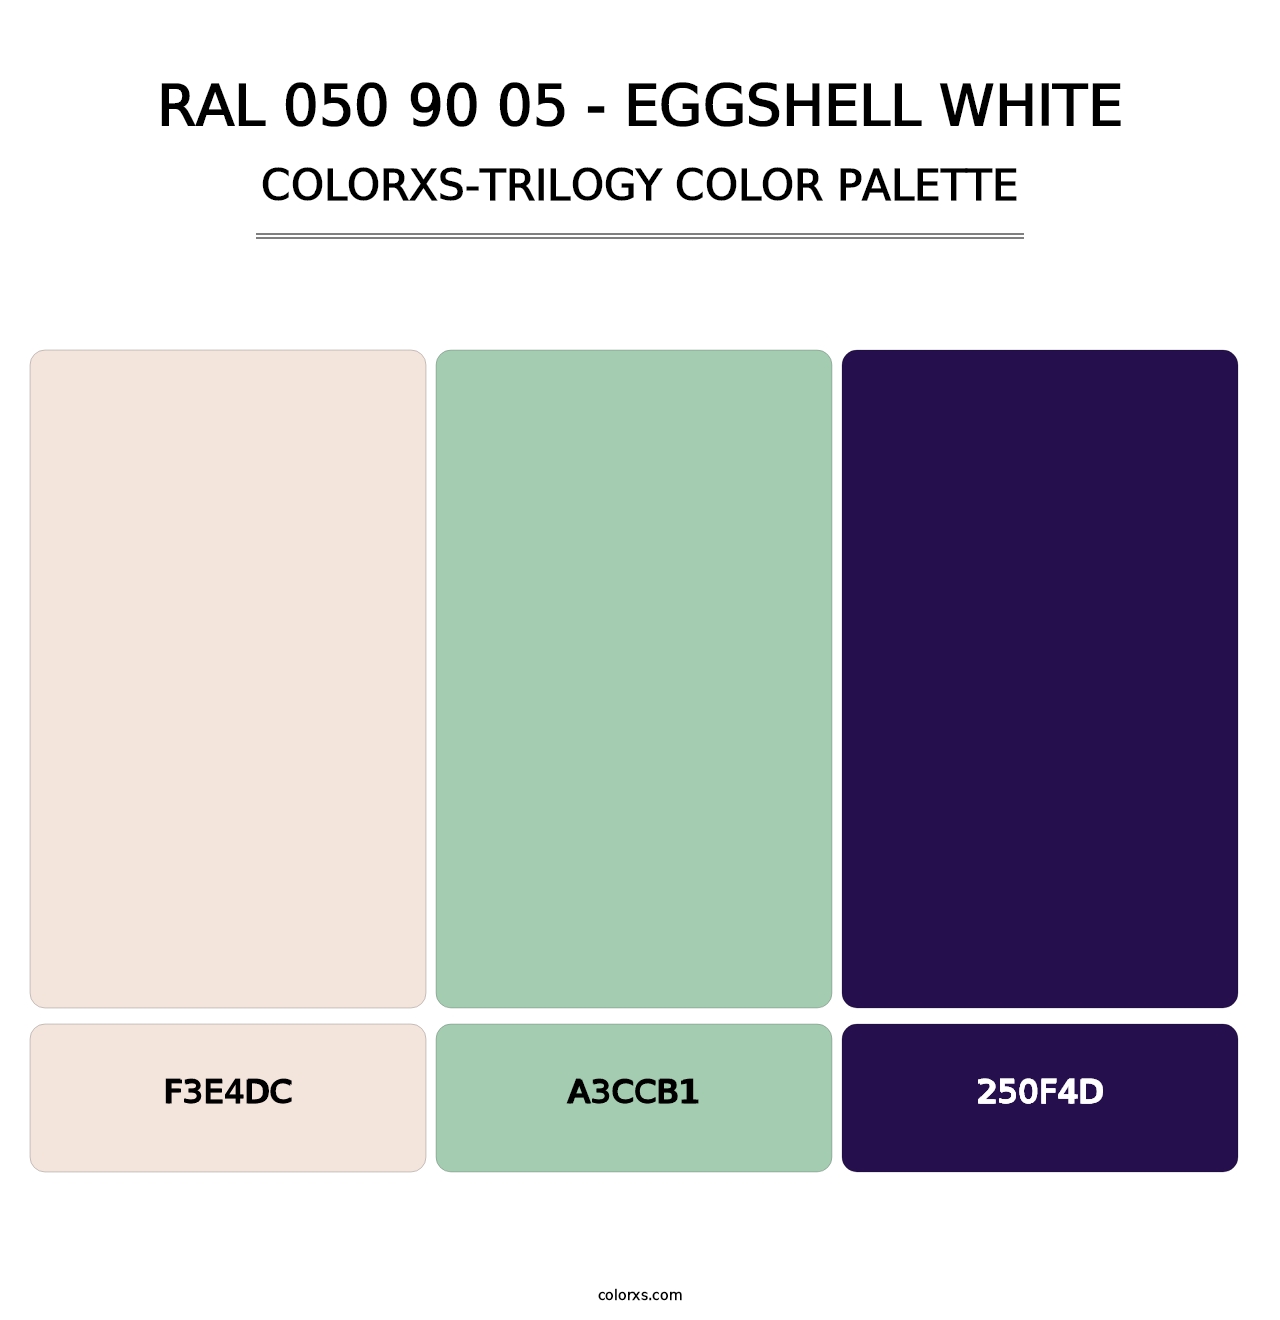 RAL 050 90 05 - Eggshell White - Colorxs Trilogy Palette